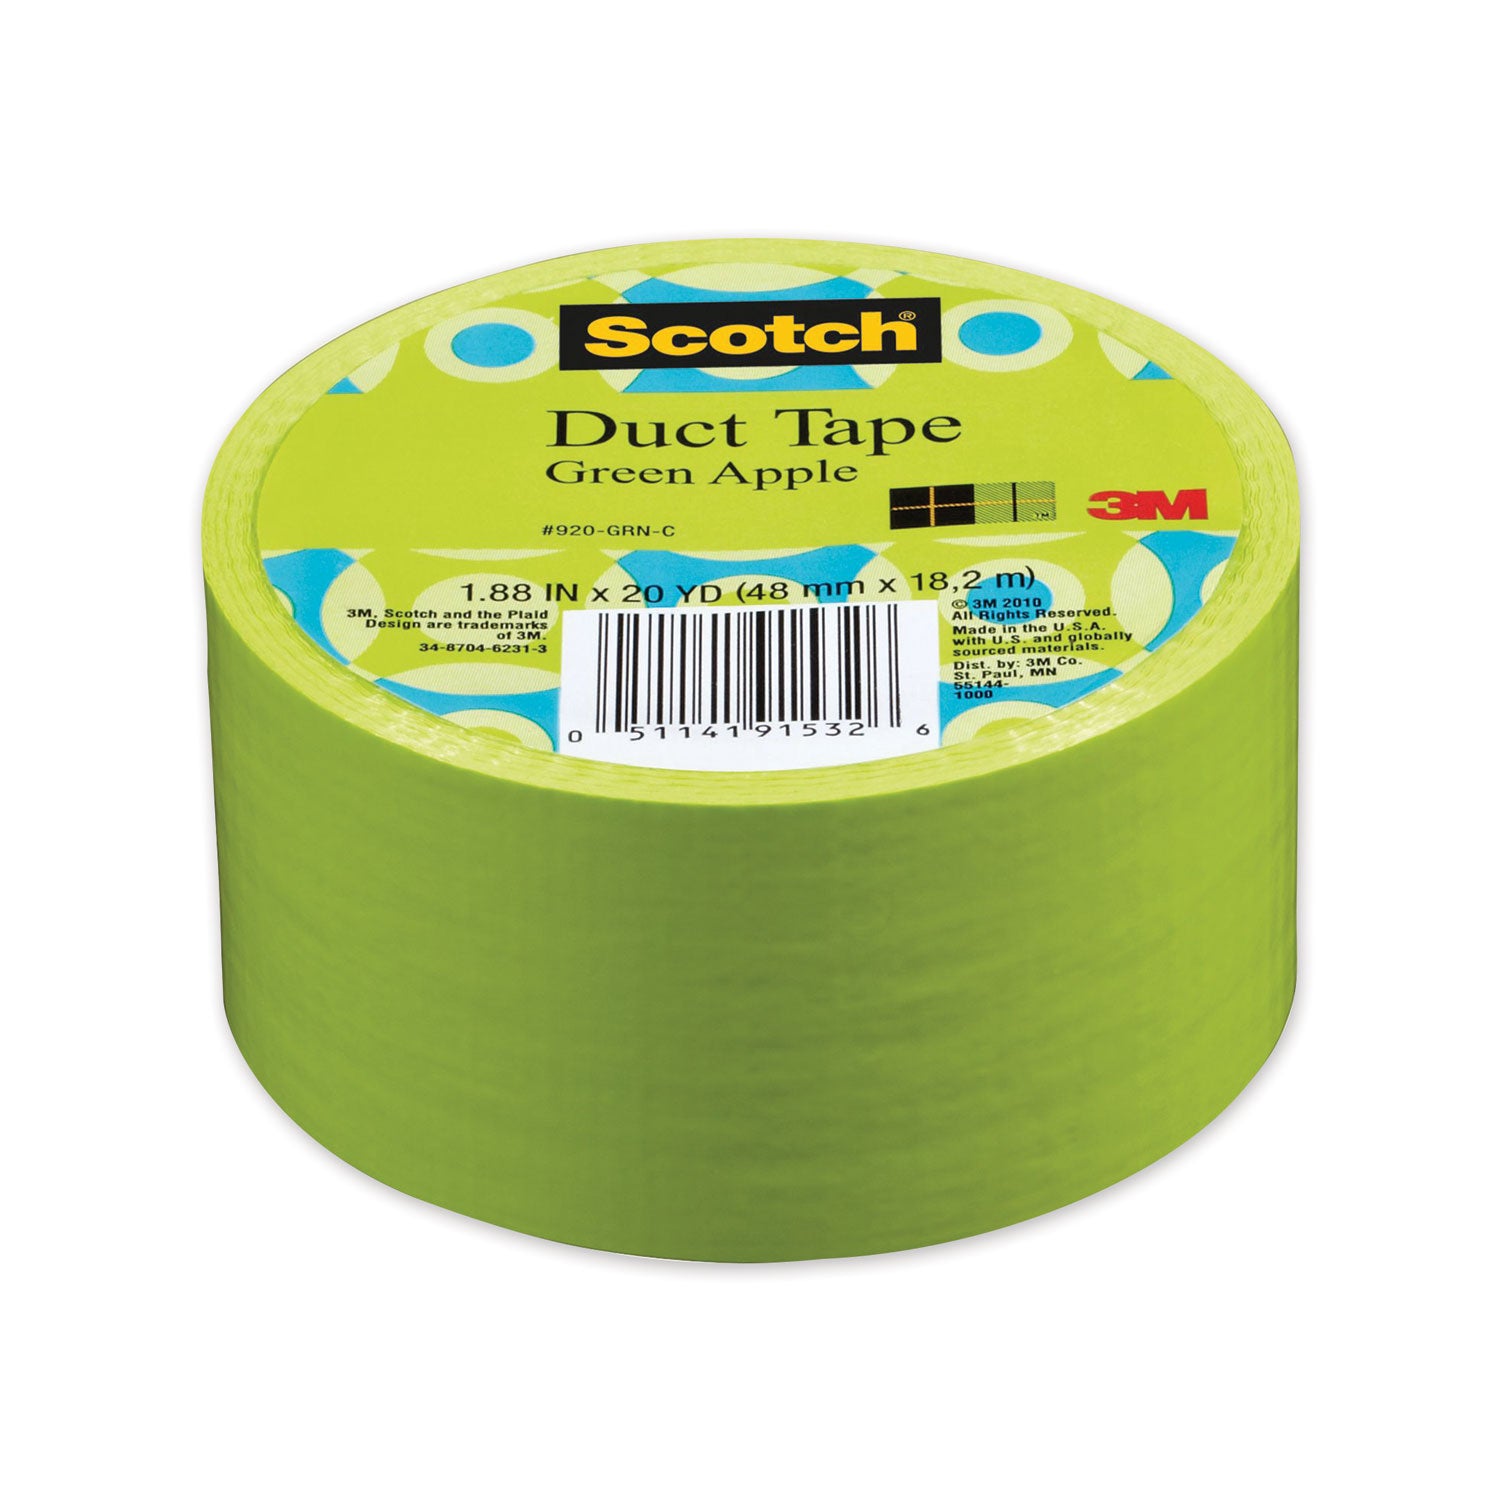 duct-tape-188-x-20-yds-green-apple_mmm70005059269 - 1